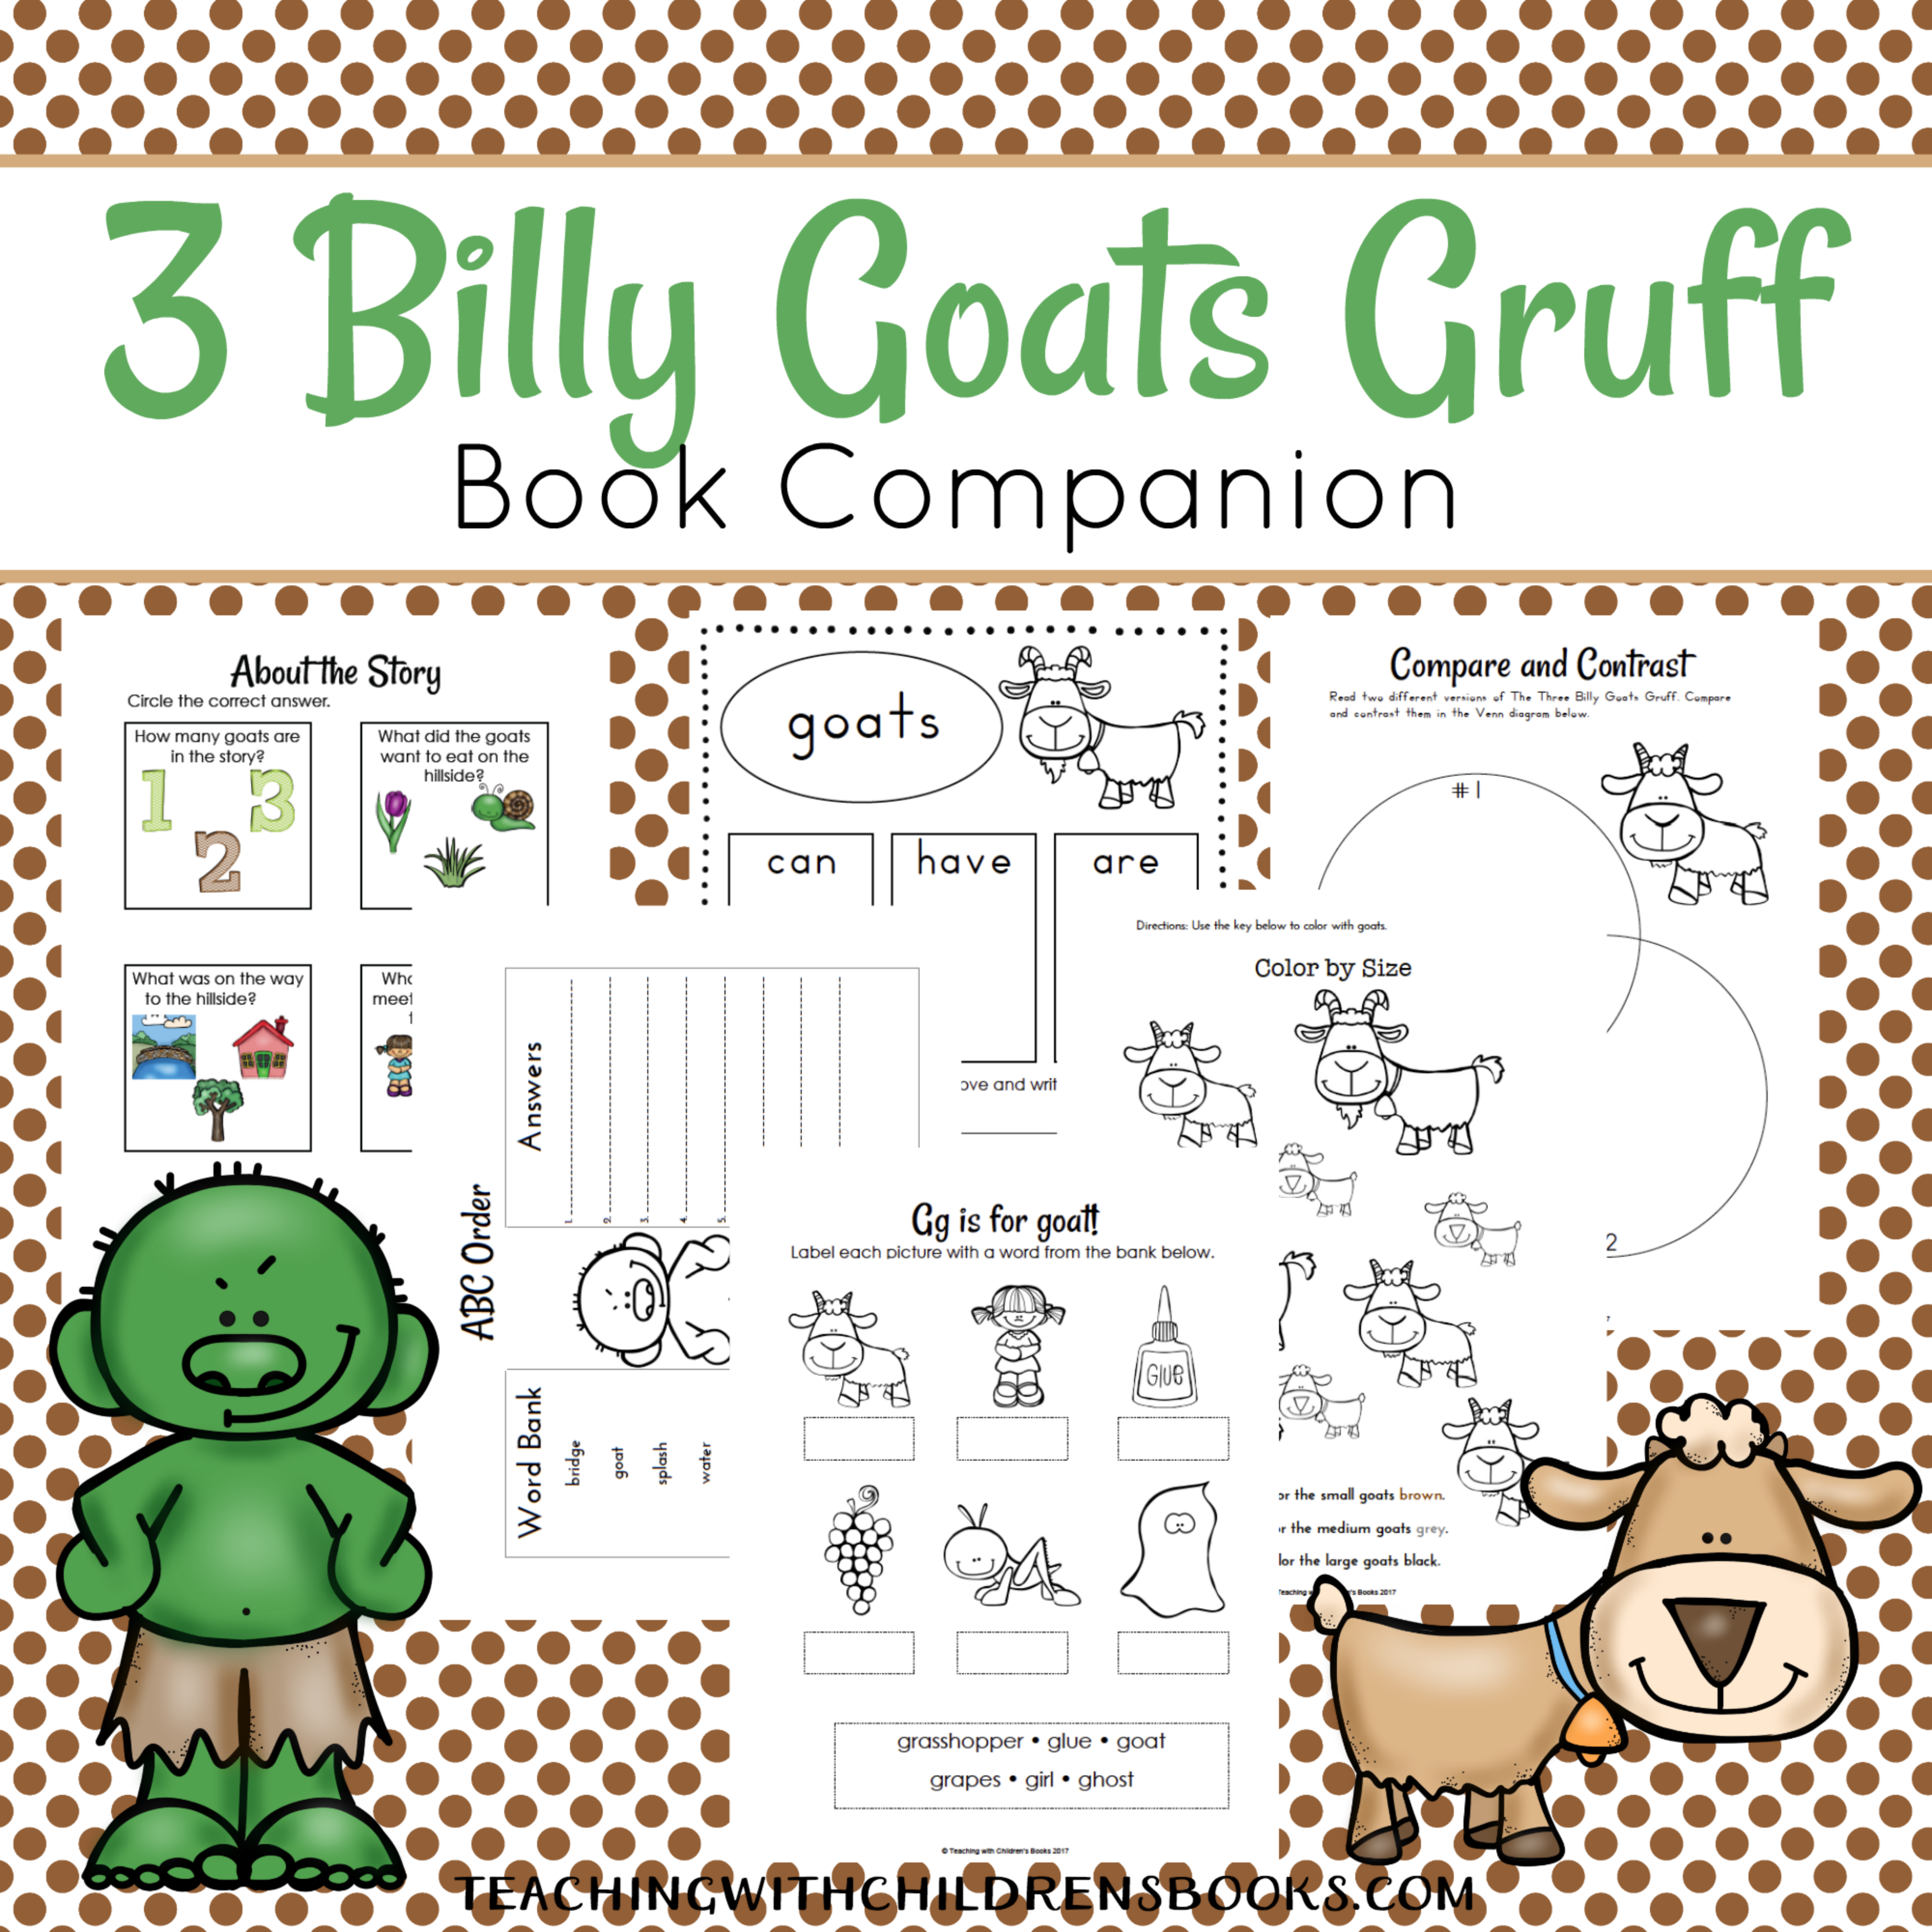 3 billy goats gruff wanted po